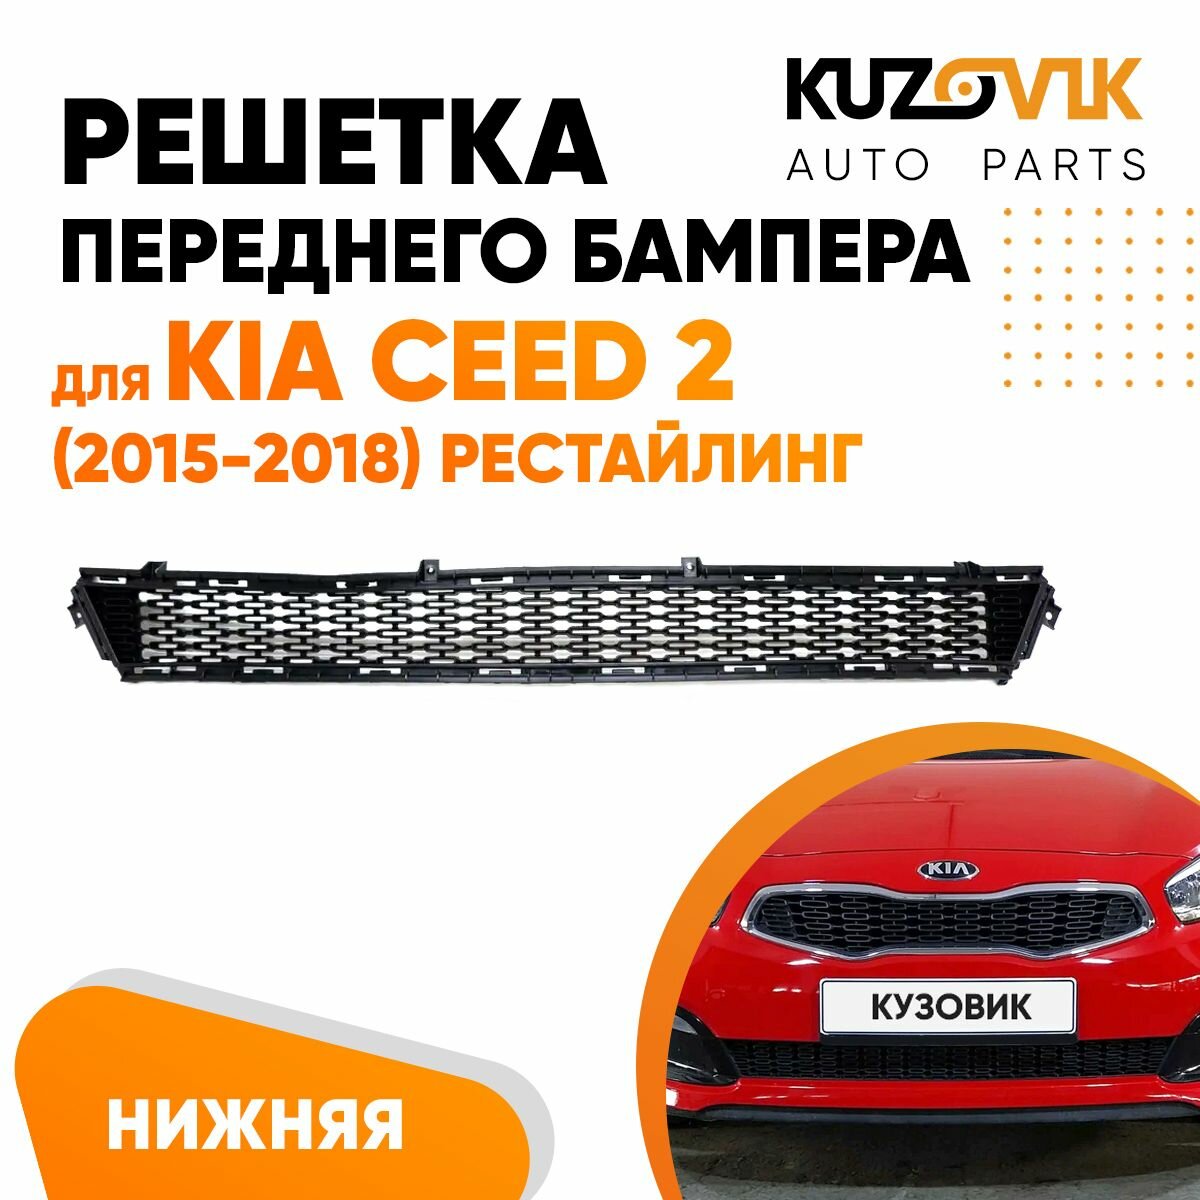 Решетка переднего бампера Kia Ceed 2 (2015-2018) нижняя рестайлинг